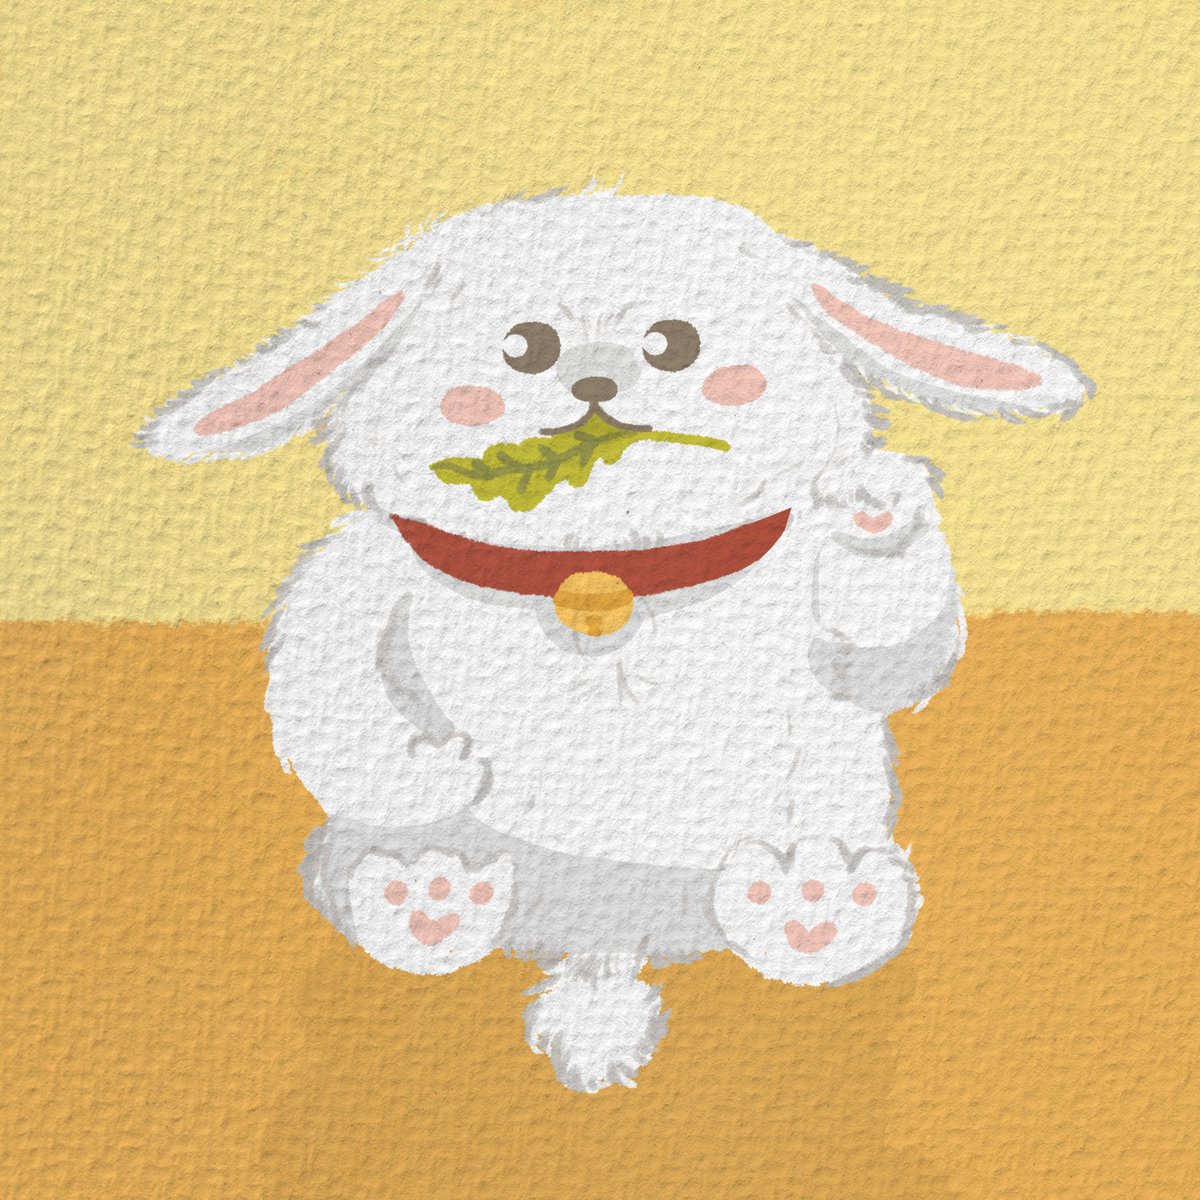 Happy Chinese New Year! Here's a welcoming rabbit for you guys :)

☀️
☀️
☀️

tags:
#illustrationart #illustration #illustrationartist #chinesenewyear #yearoftherabbit #pastelart #pastel #pastelaesthetic #artgram #artillustration #artph